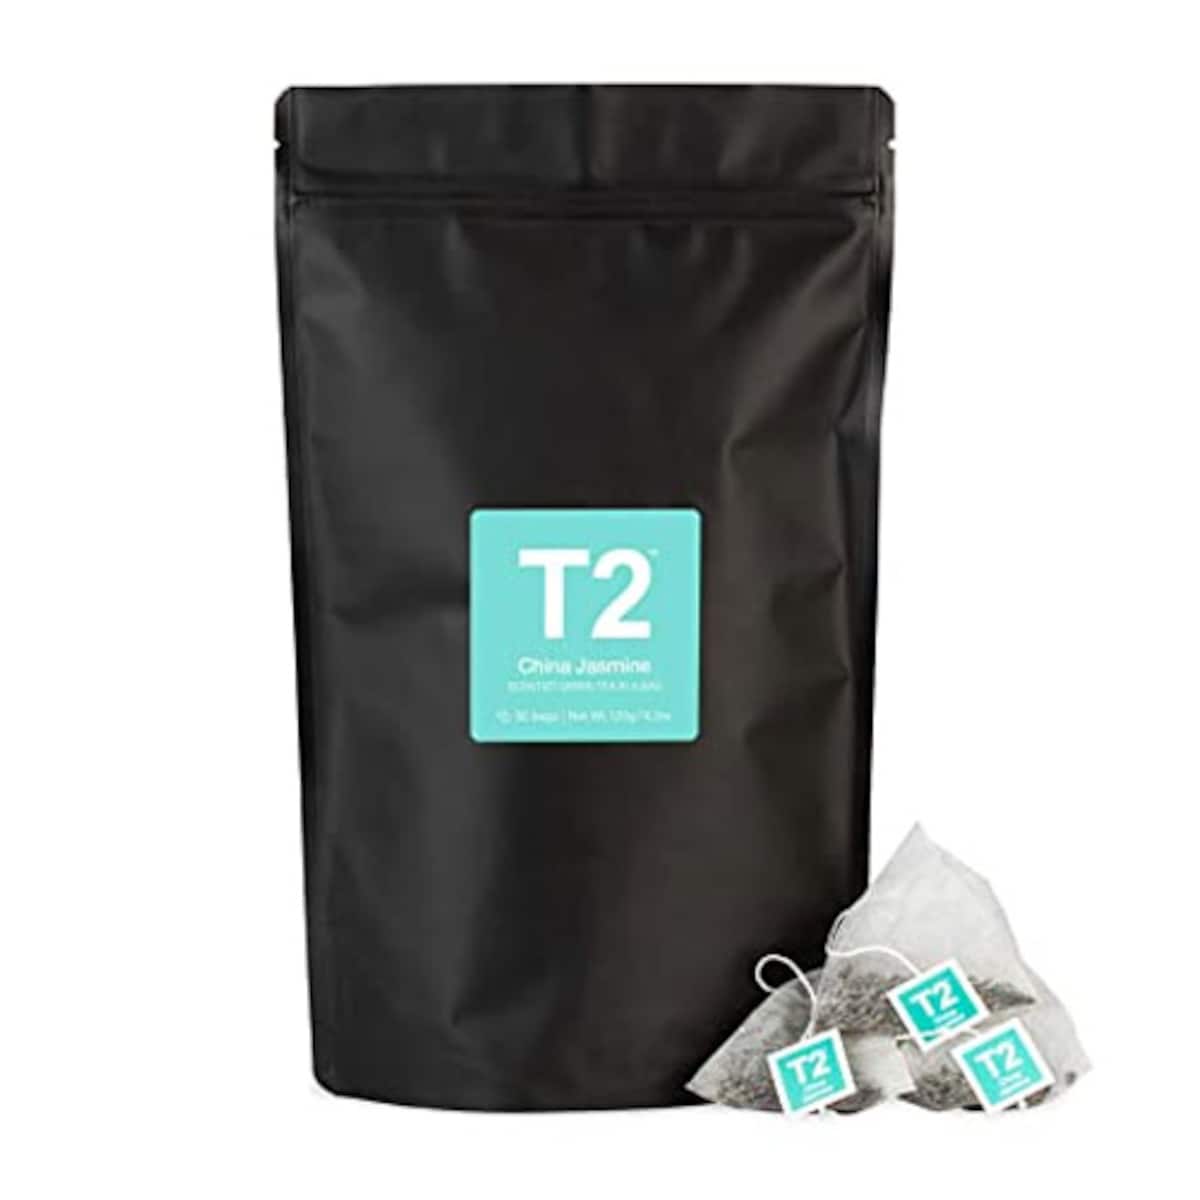 T2 China Jasmine Teabags 60 Pack